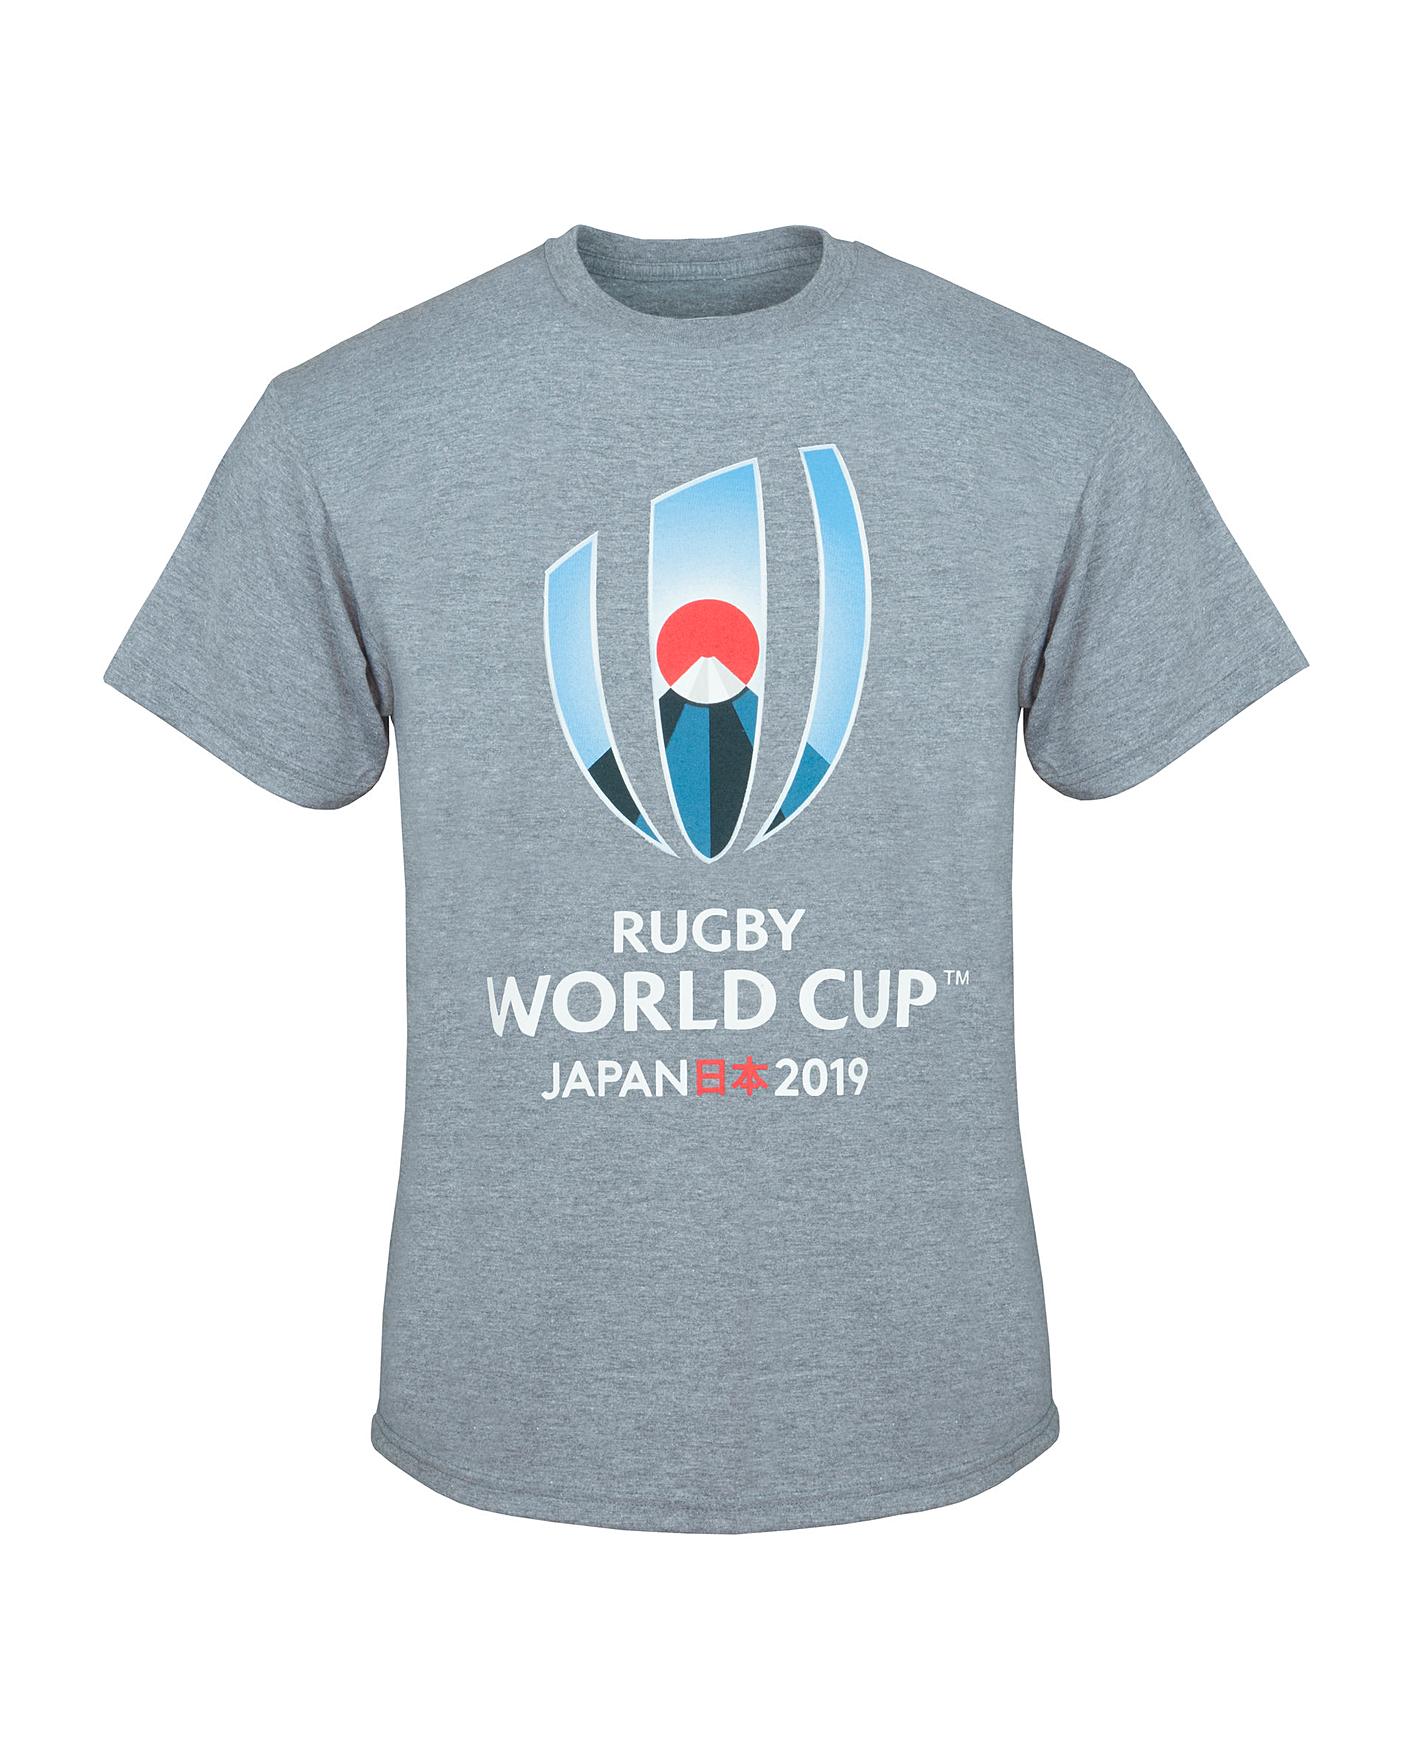 2015 Rugby World Cup RWC WEBB ELLIS CUP Mens Scrum Sweater Jersey Shirt L XL 2XL 